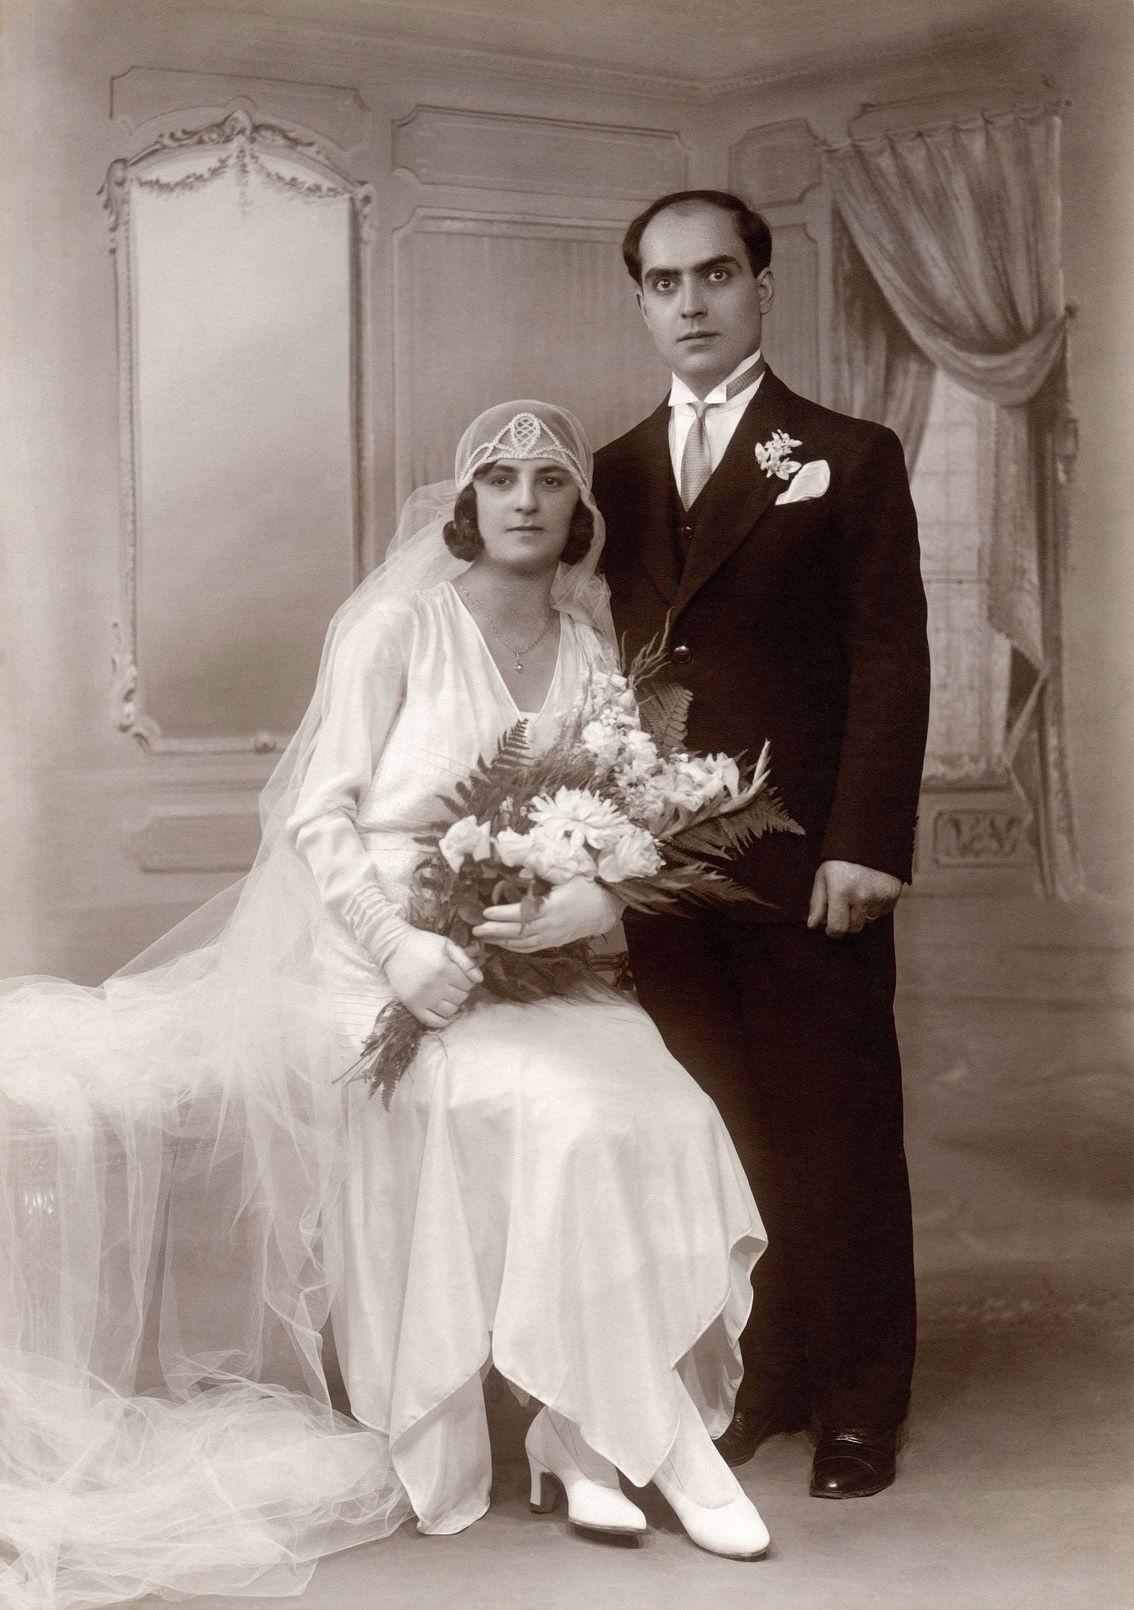 My grand-parents wedding, Paris, France, 1931. View full size.